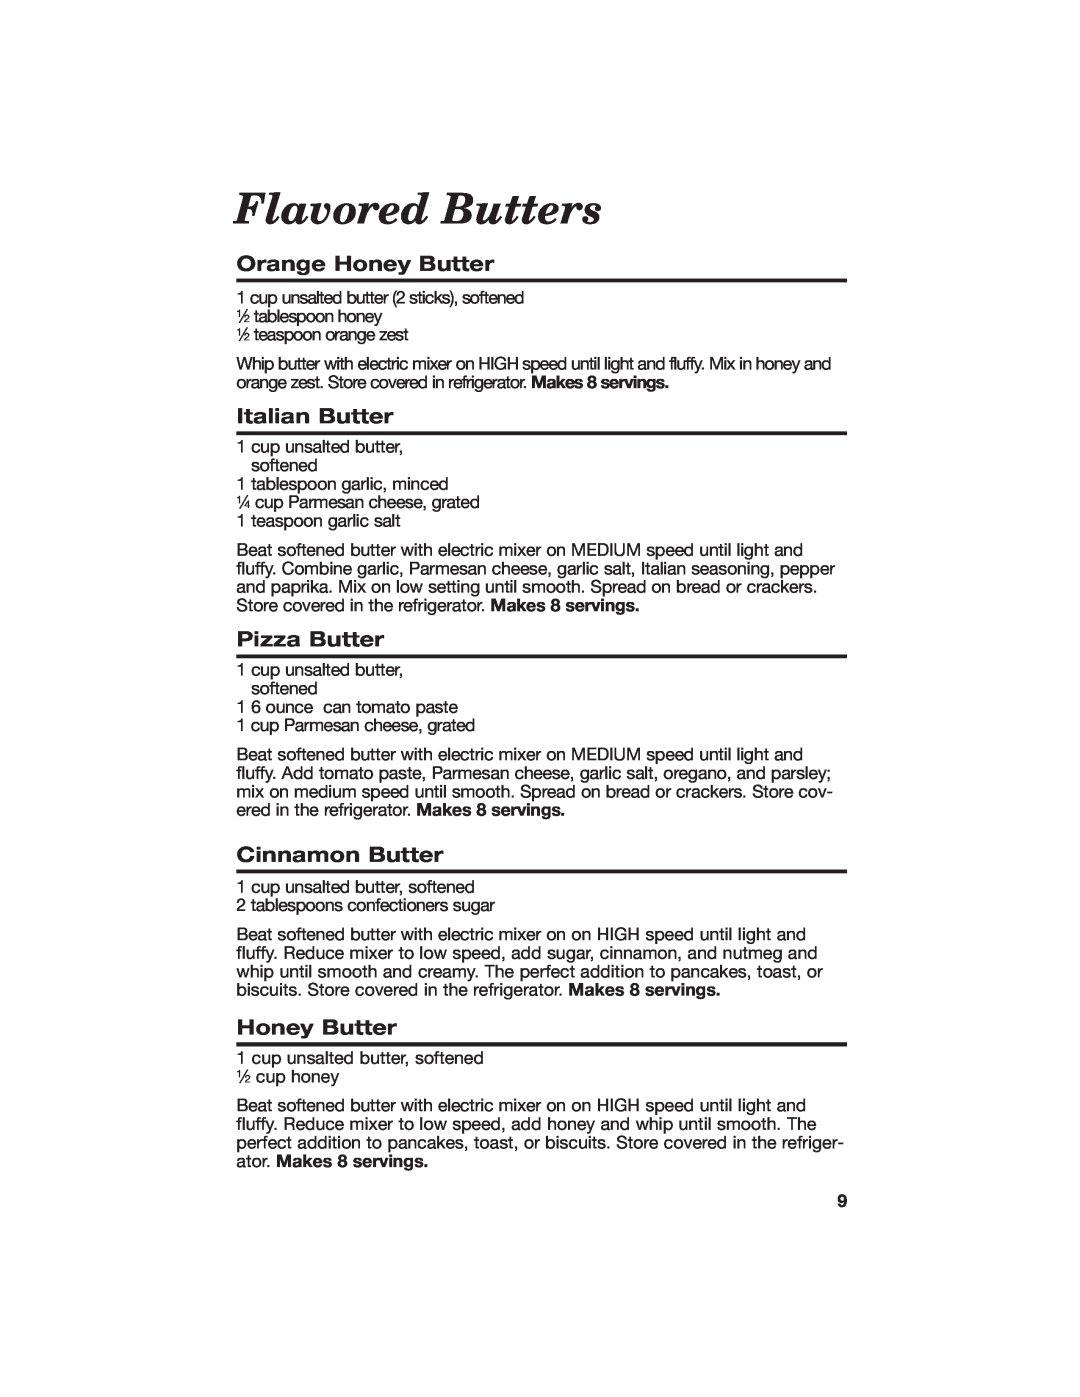 Hamilton Beach All-Metal Toaster Flavored Butters, Orange Honey Butter, Italian Butter, Pizza Butter, Cinnamon Butter 